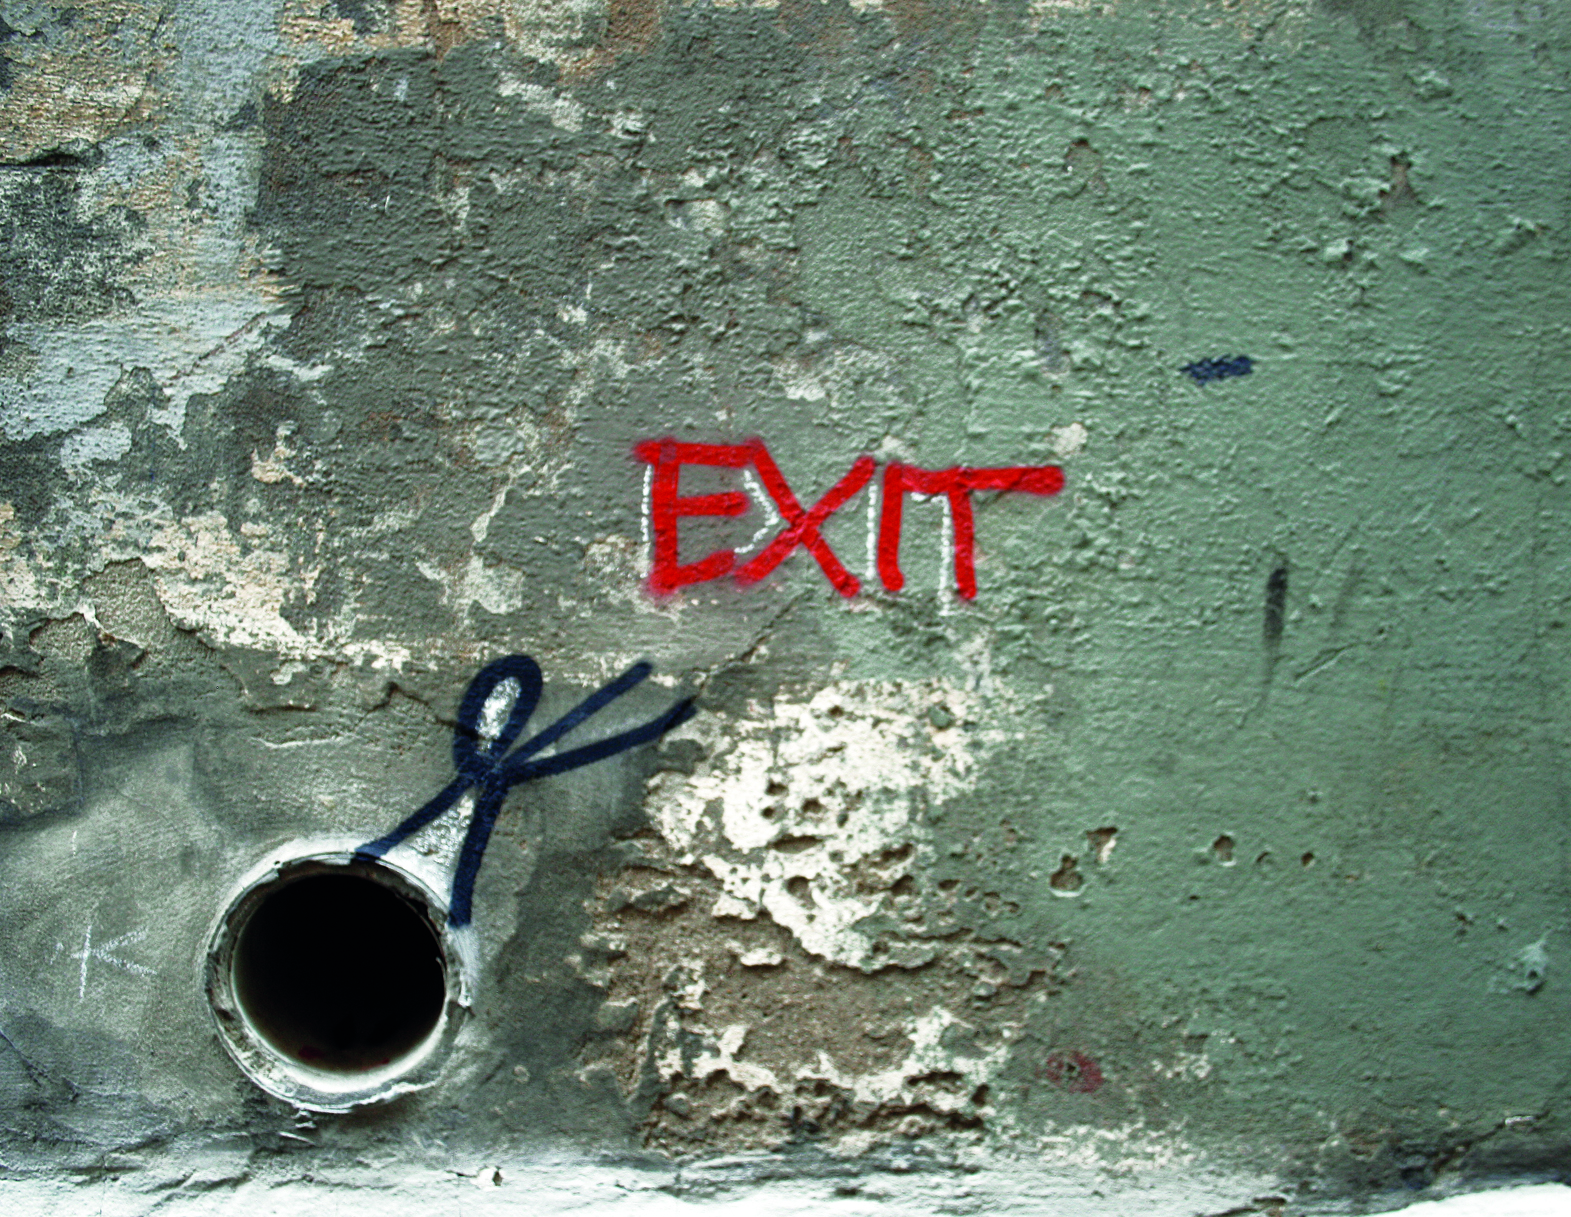 Exit 1